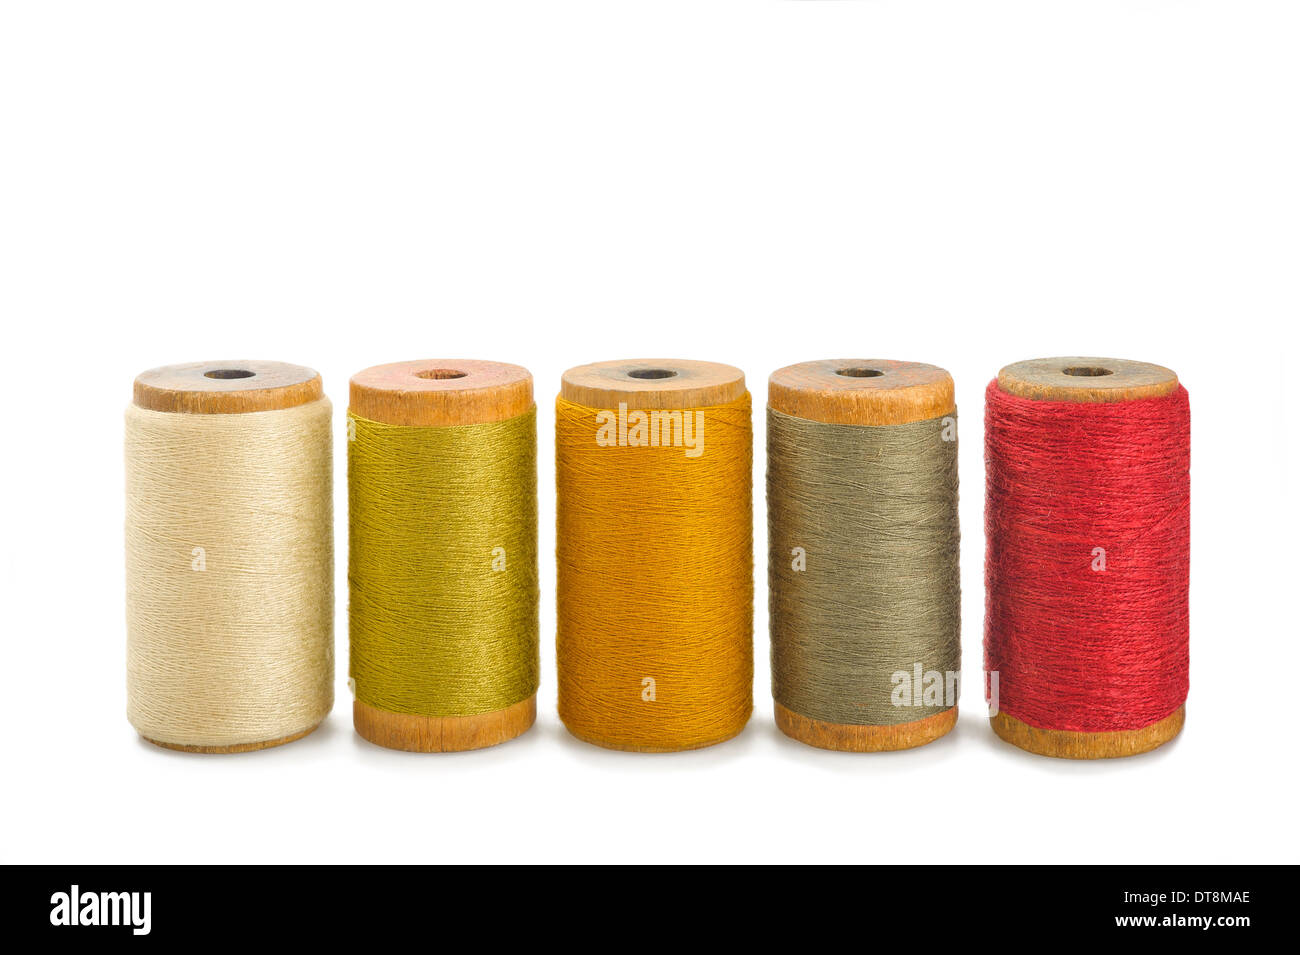 Colored spools of cotton thread Stock Photo